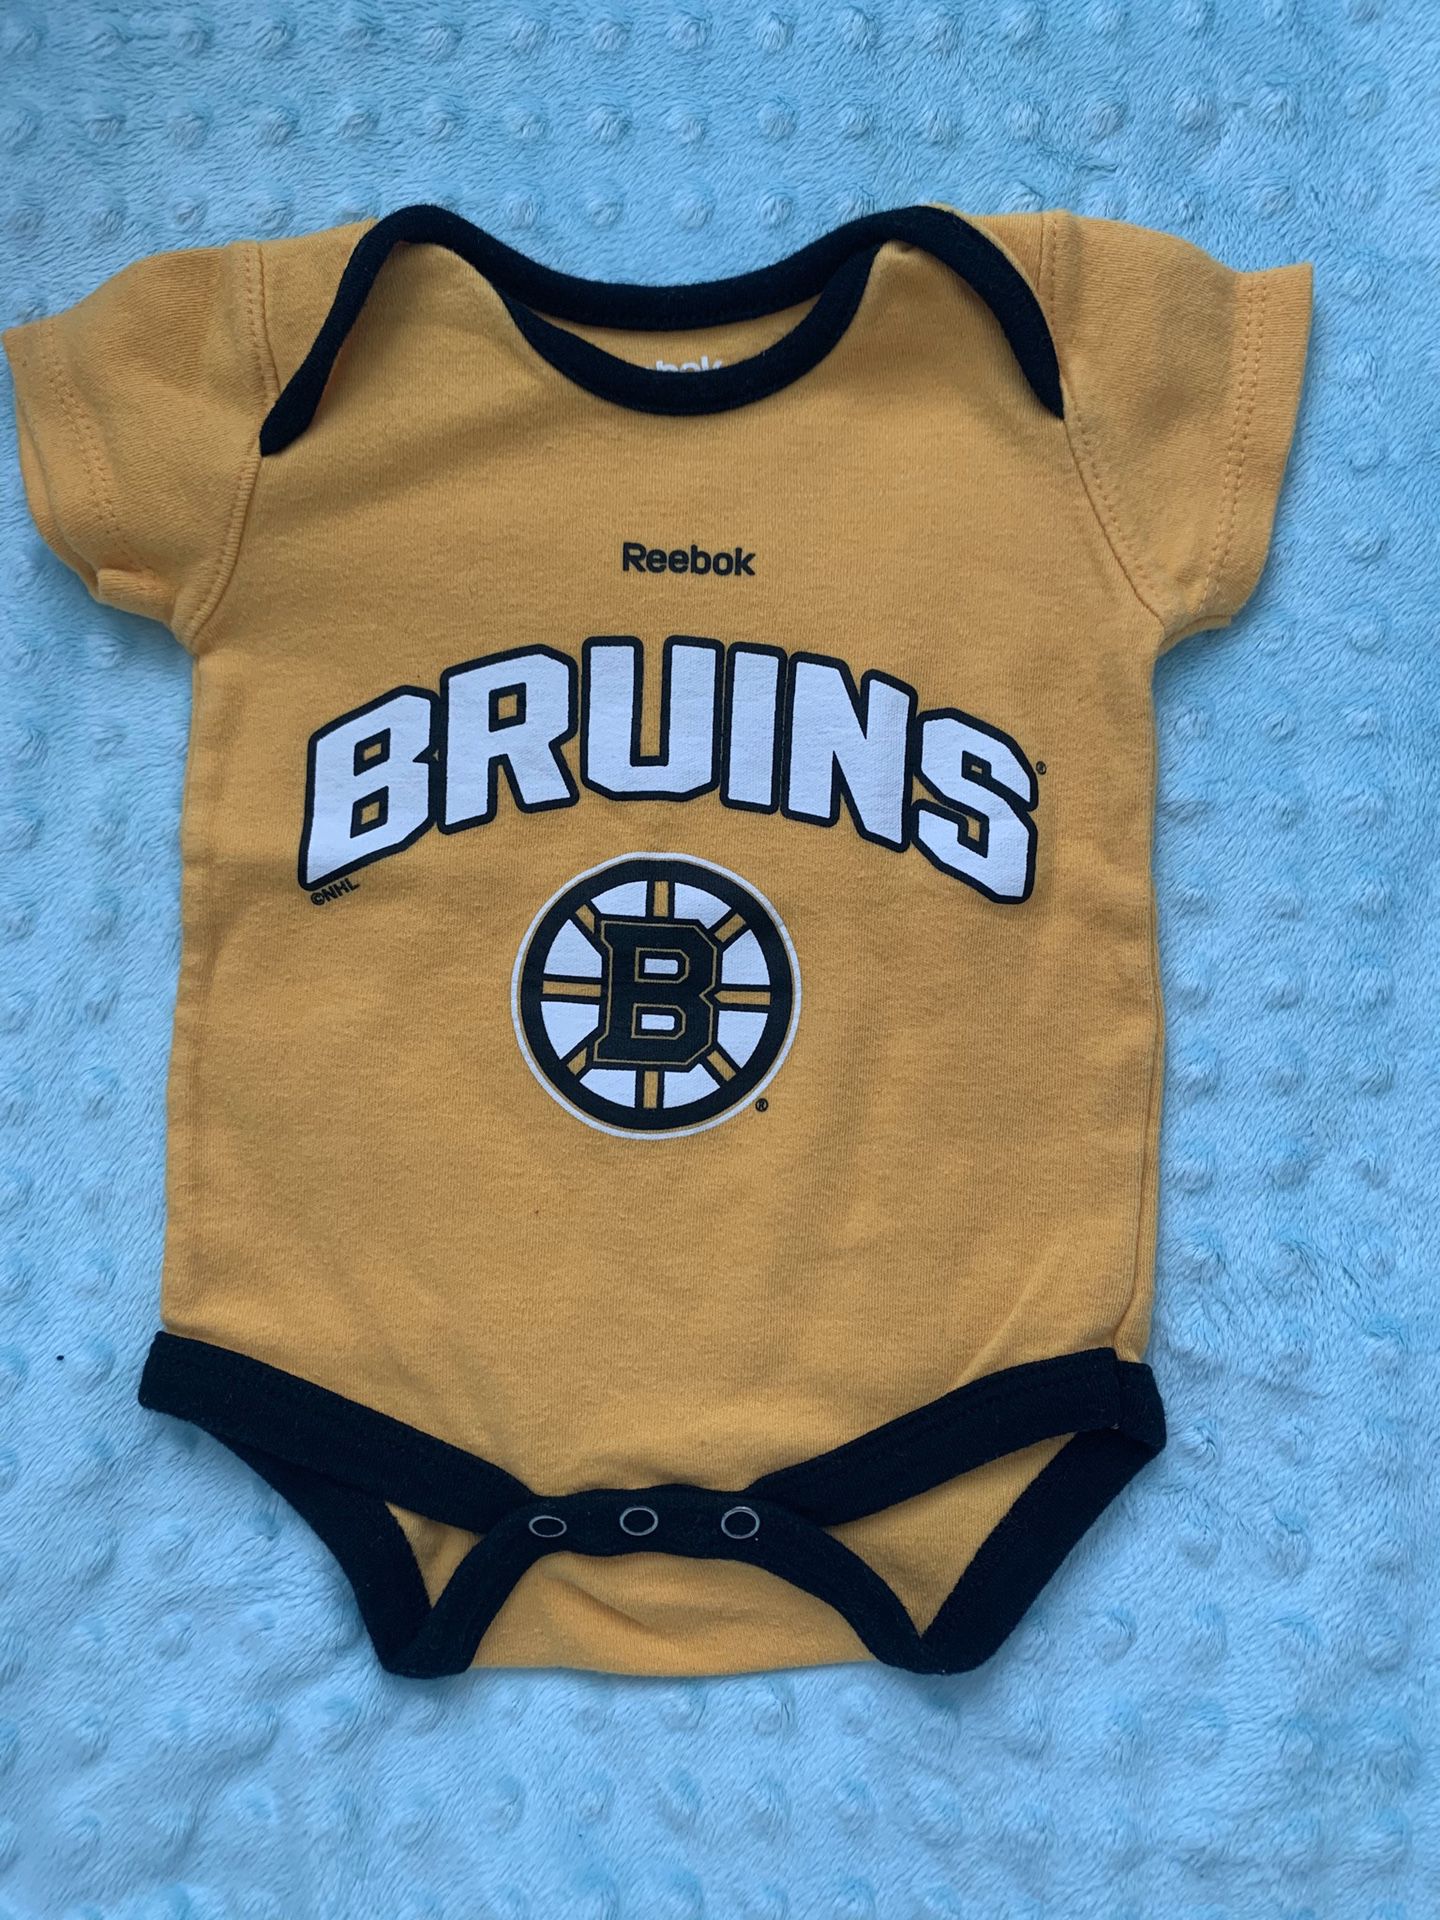 0-3 baby onesie Bruins